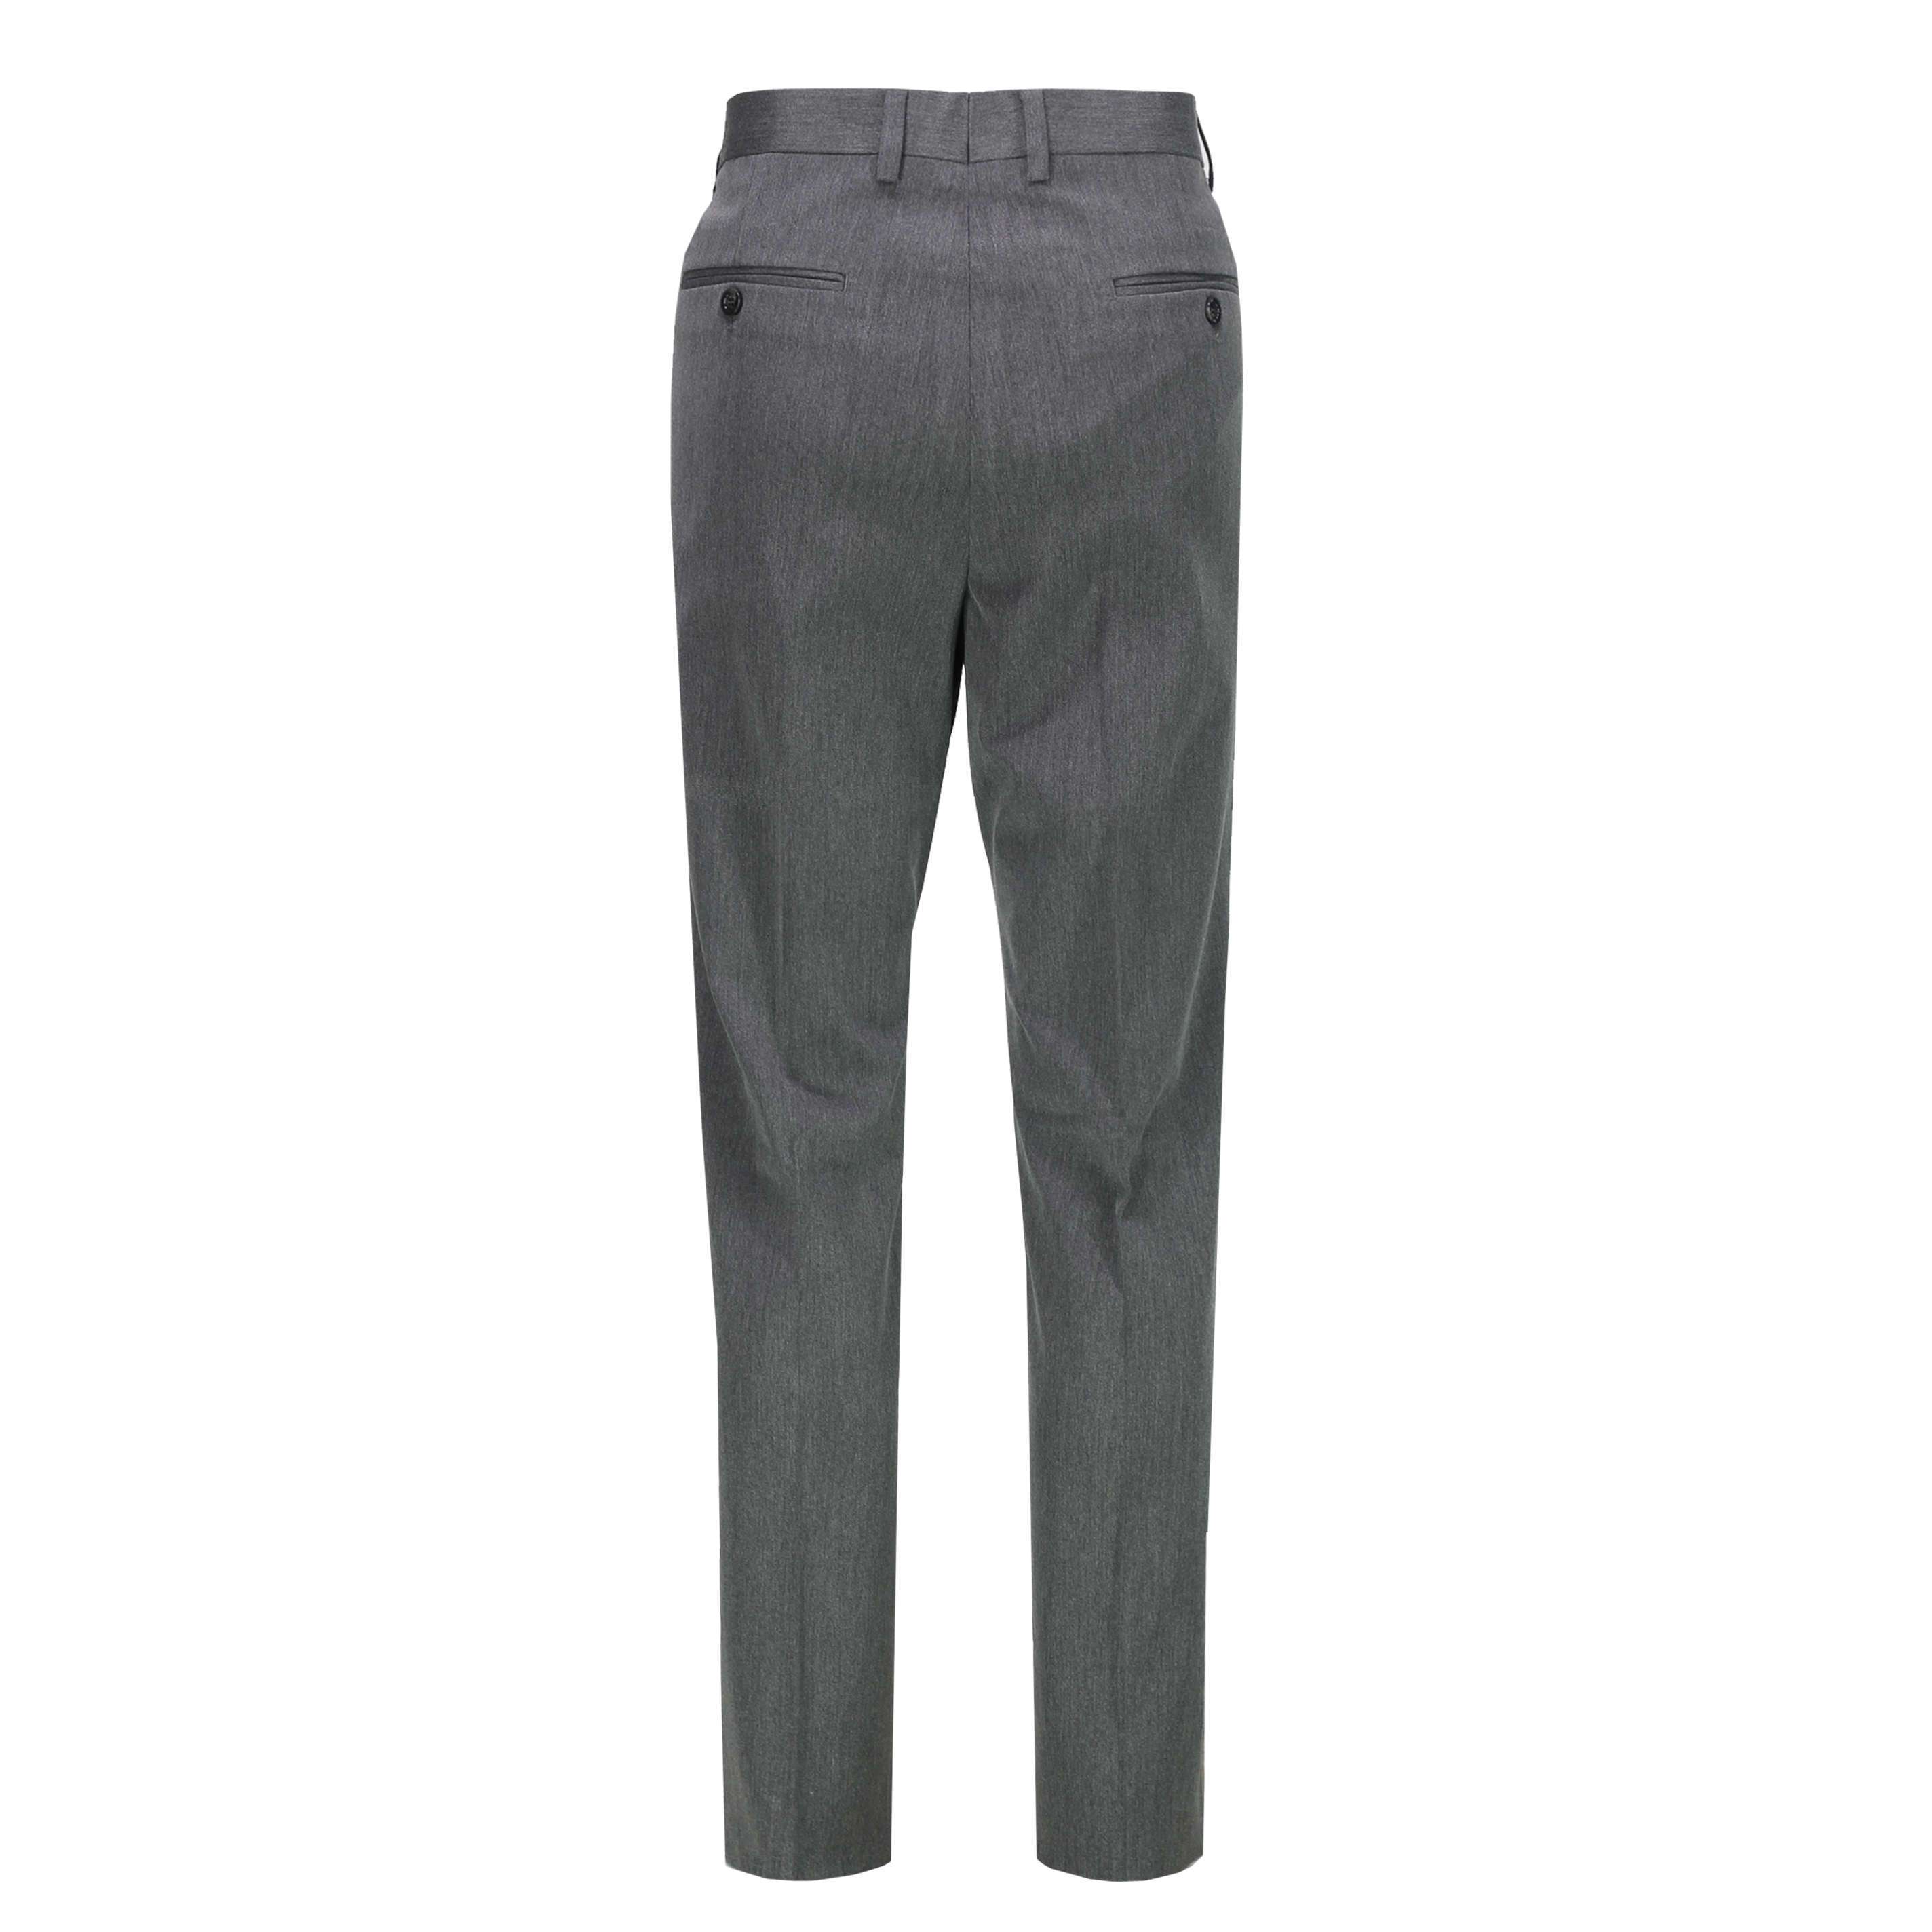 Jross - Charcoal Grey Formal Suit Trouser